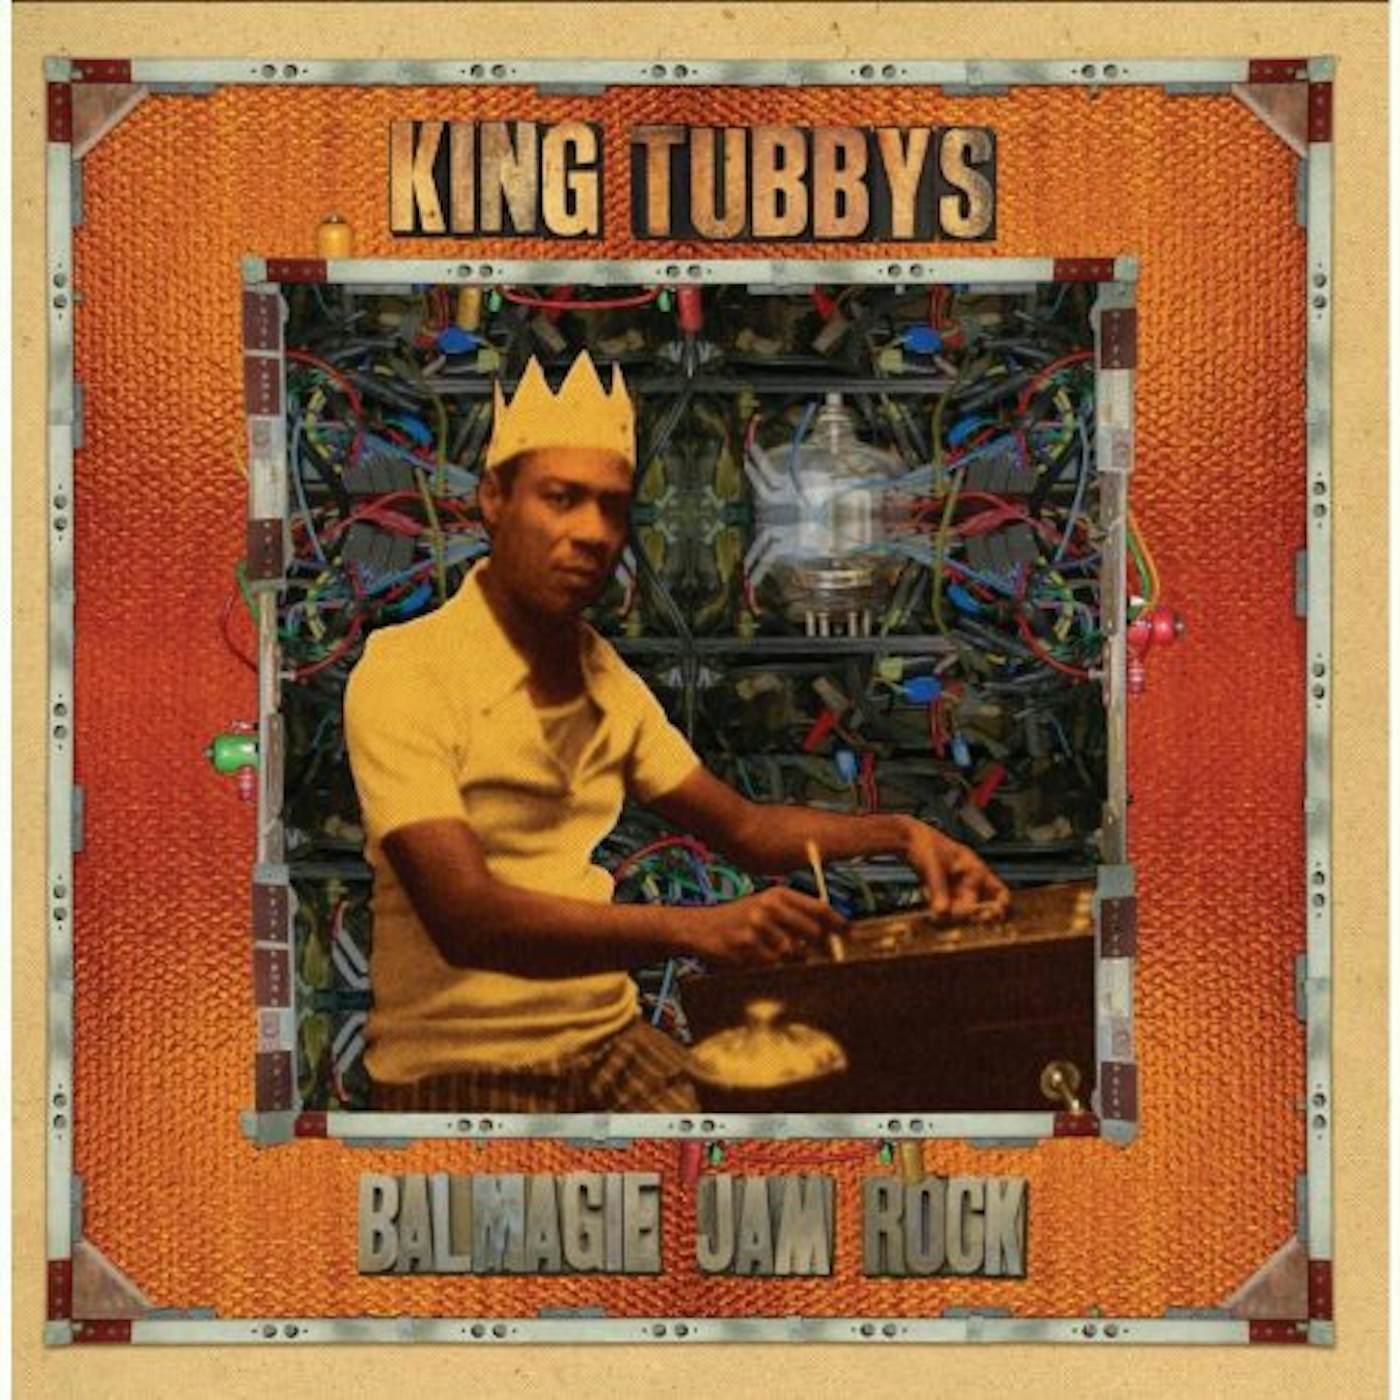 King Tubby Balmagie Jam Rock Vinyl Record